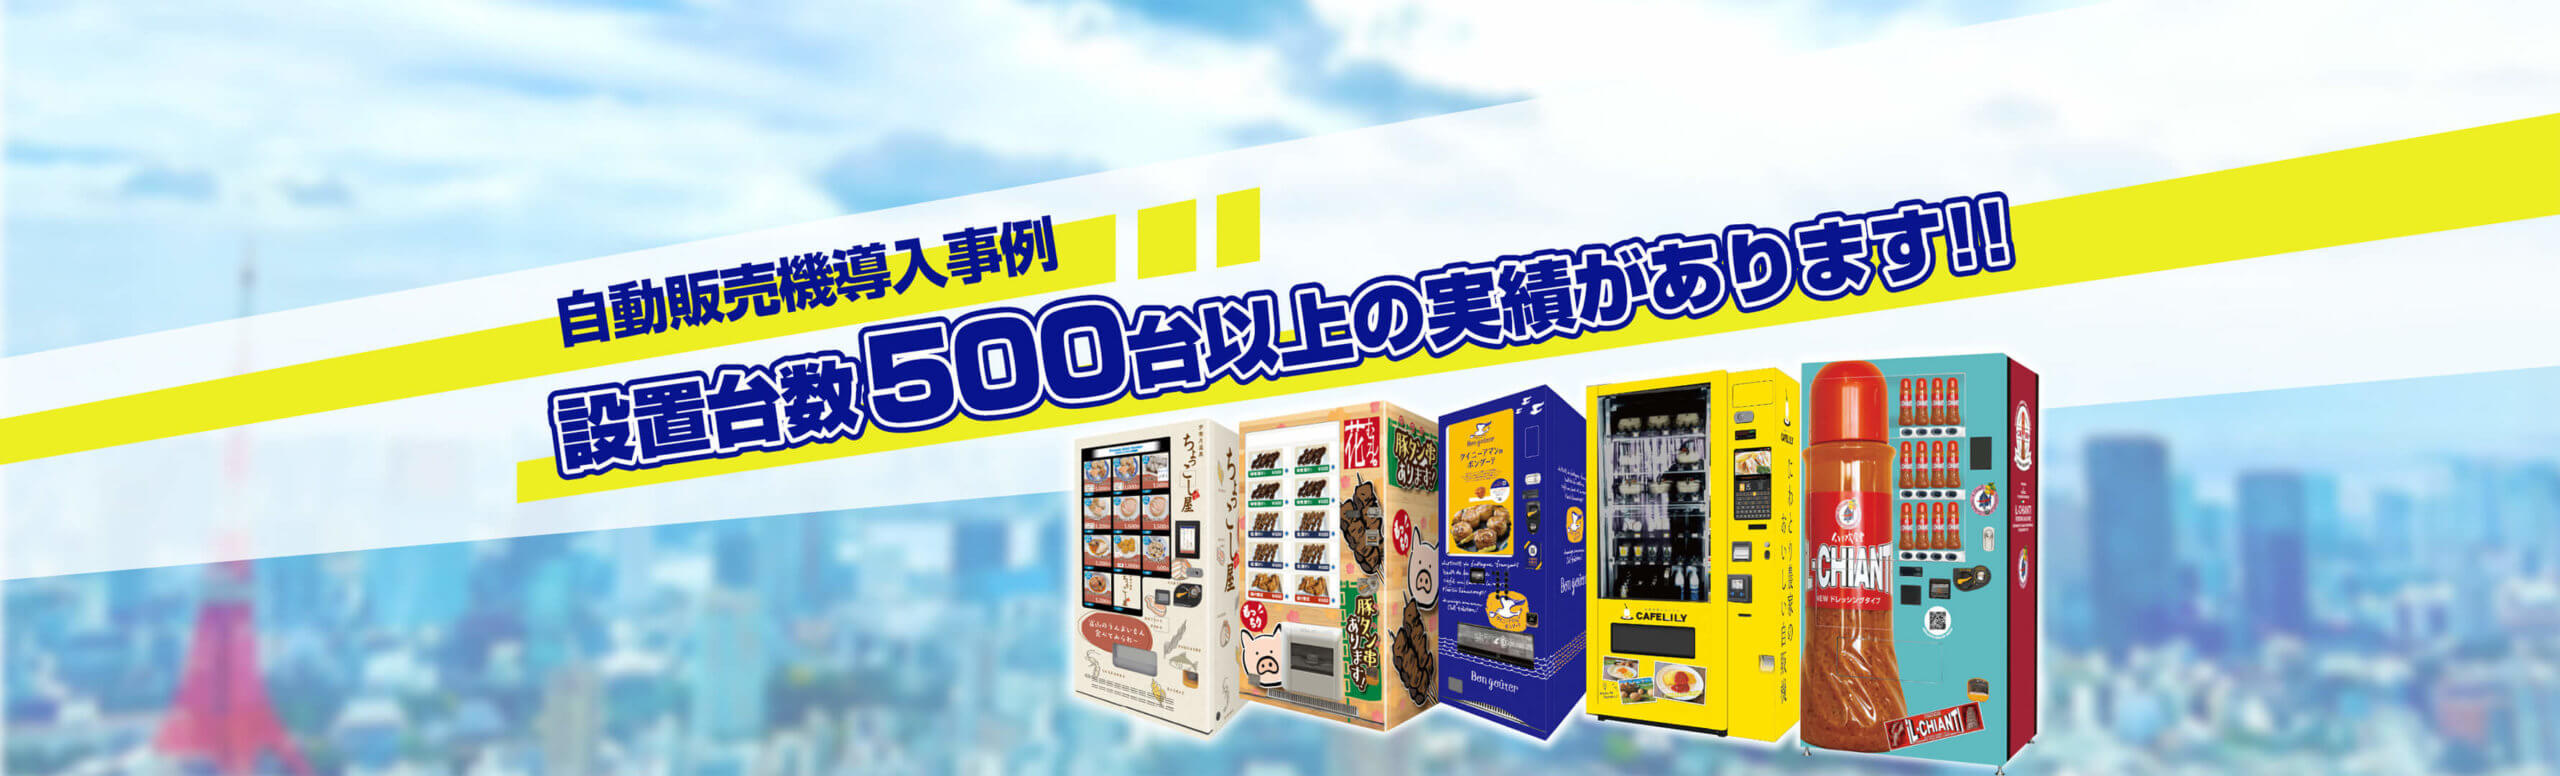 Cat Berry 成田様に食品冷蔵自動販売機を設置しました